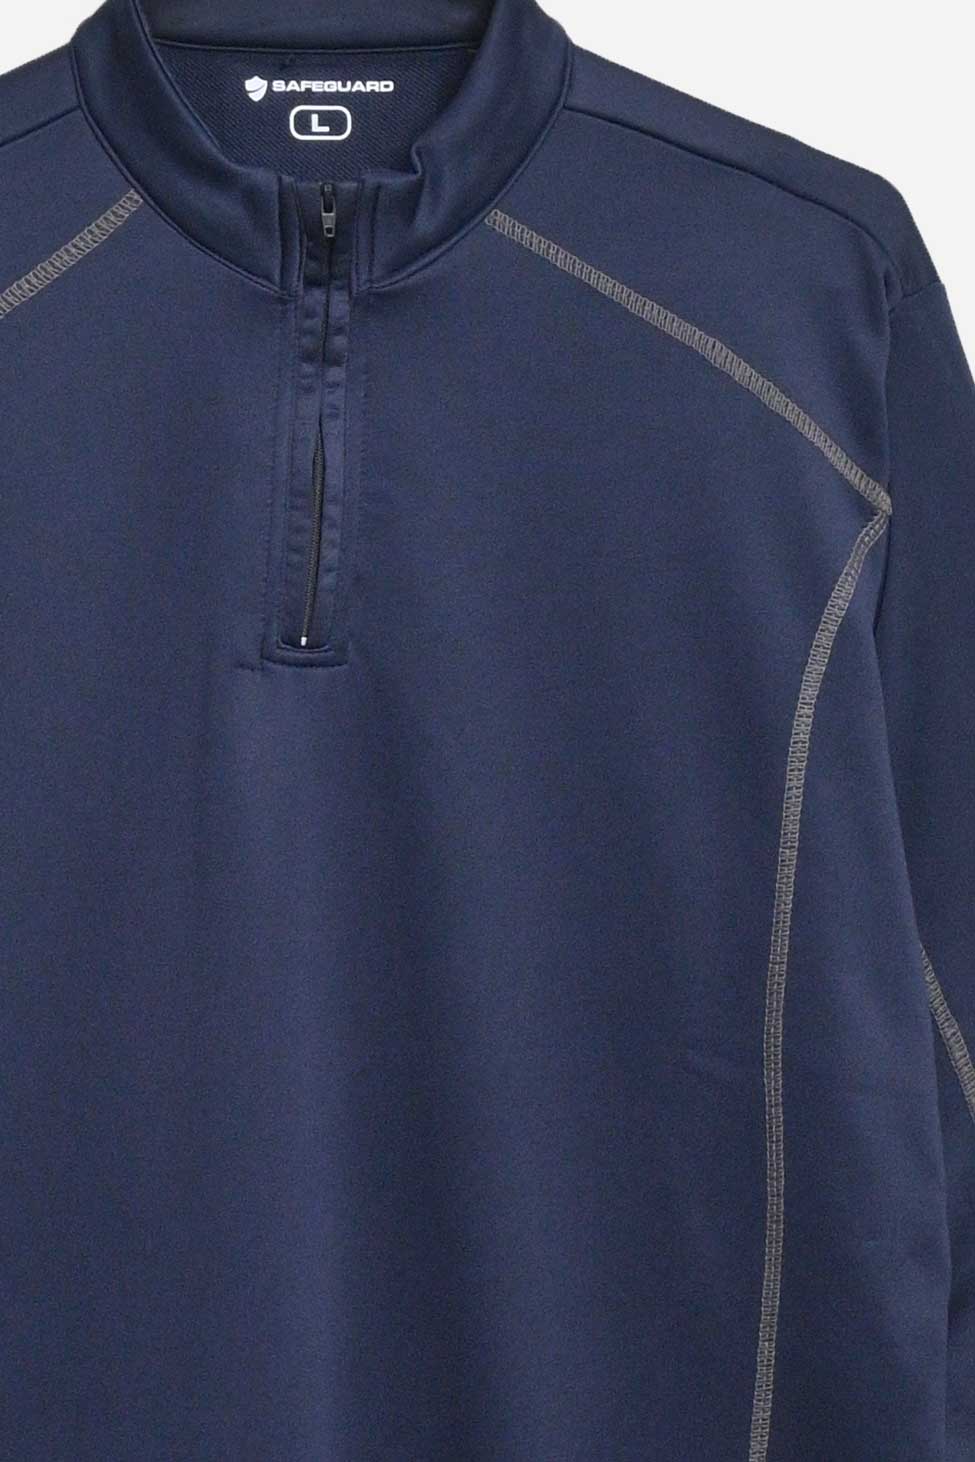 SG Men's Quarter Zipper Minor Fault Activewear Sweat Shirt